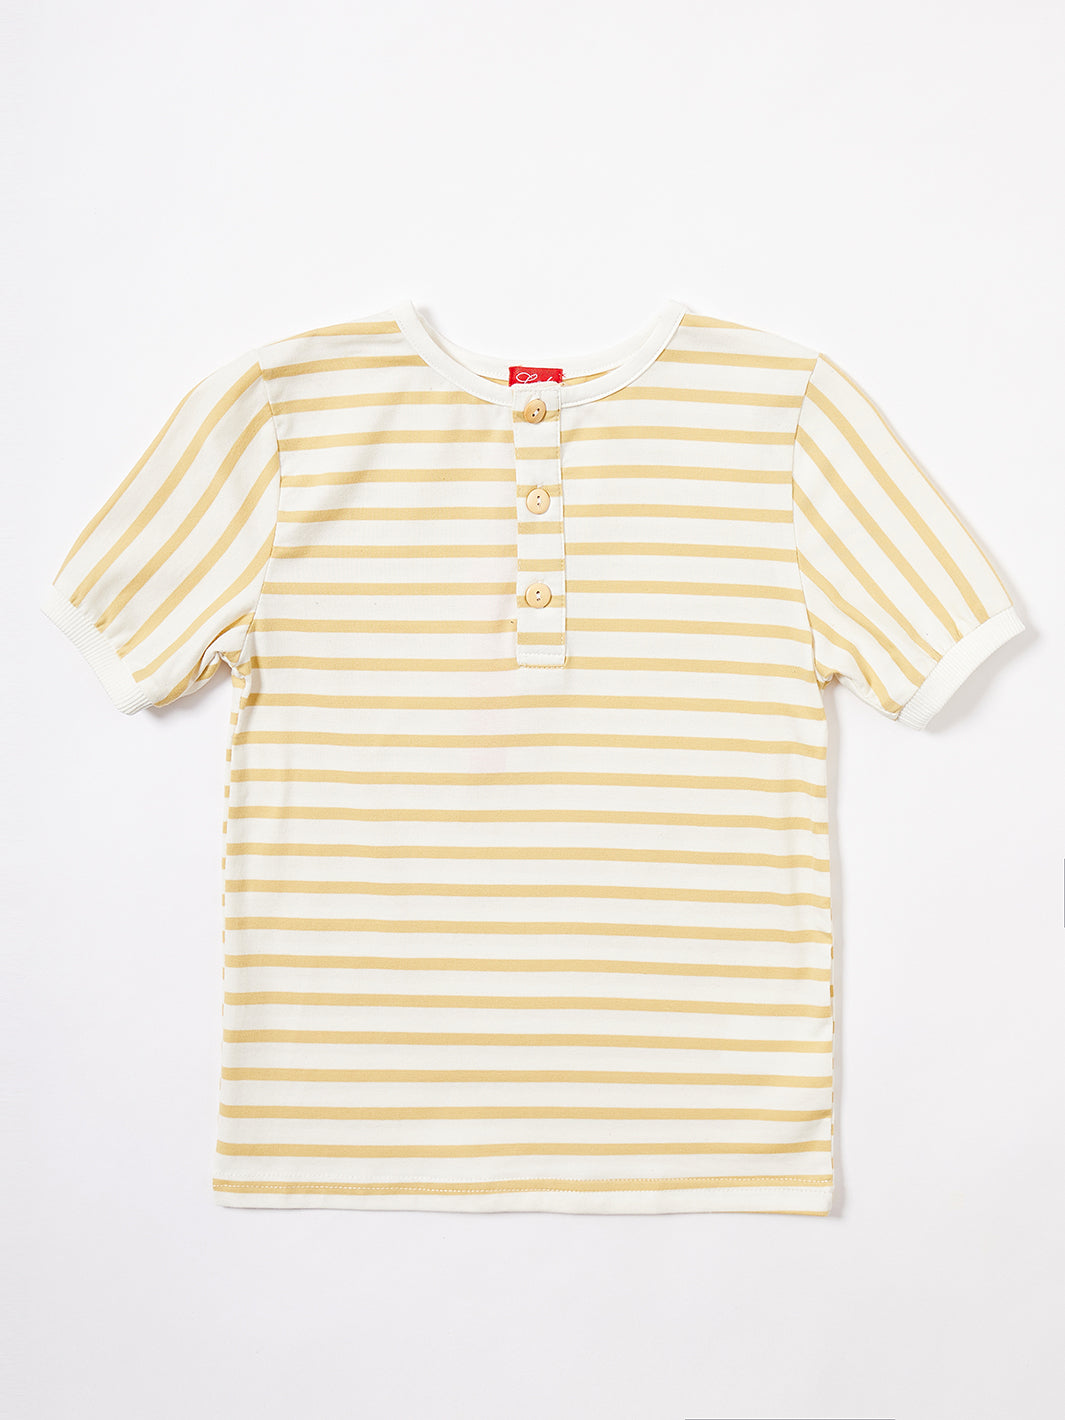 Classic Stripe Short Sleeve Top - Yellow